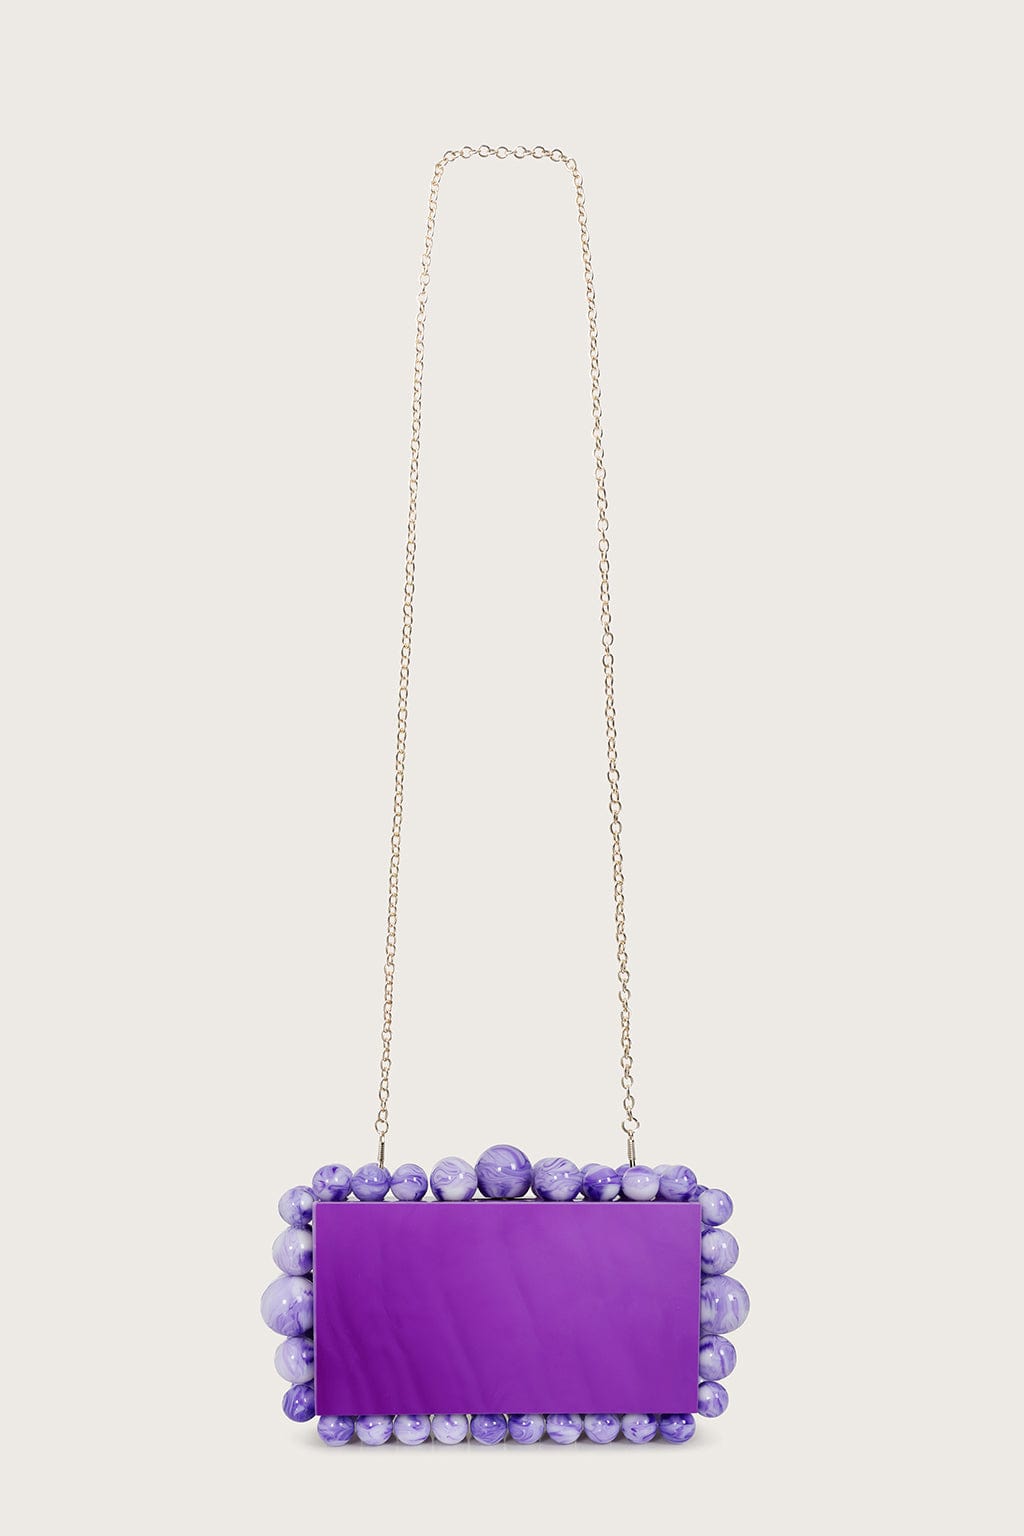 TIA Marbled Faux Pearl Box Clutch Bag in Purple